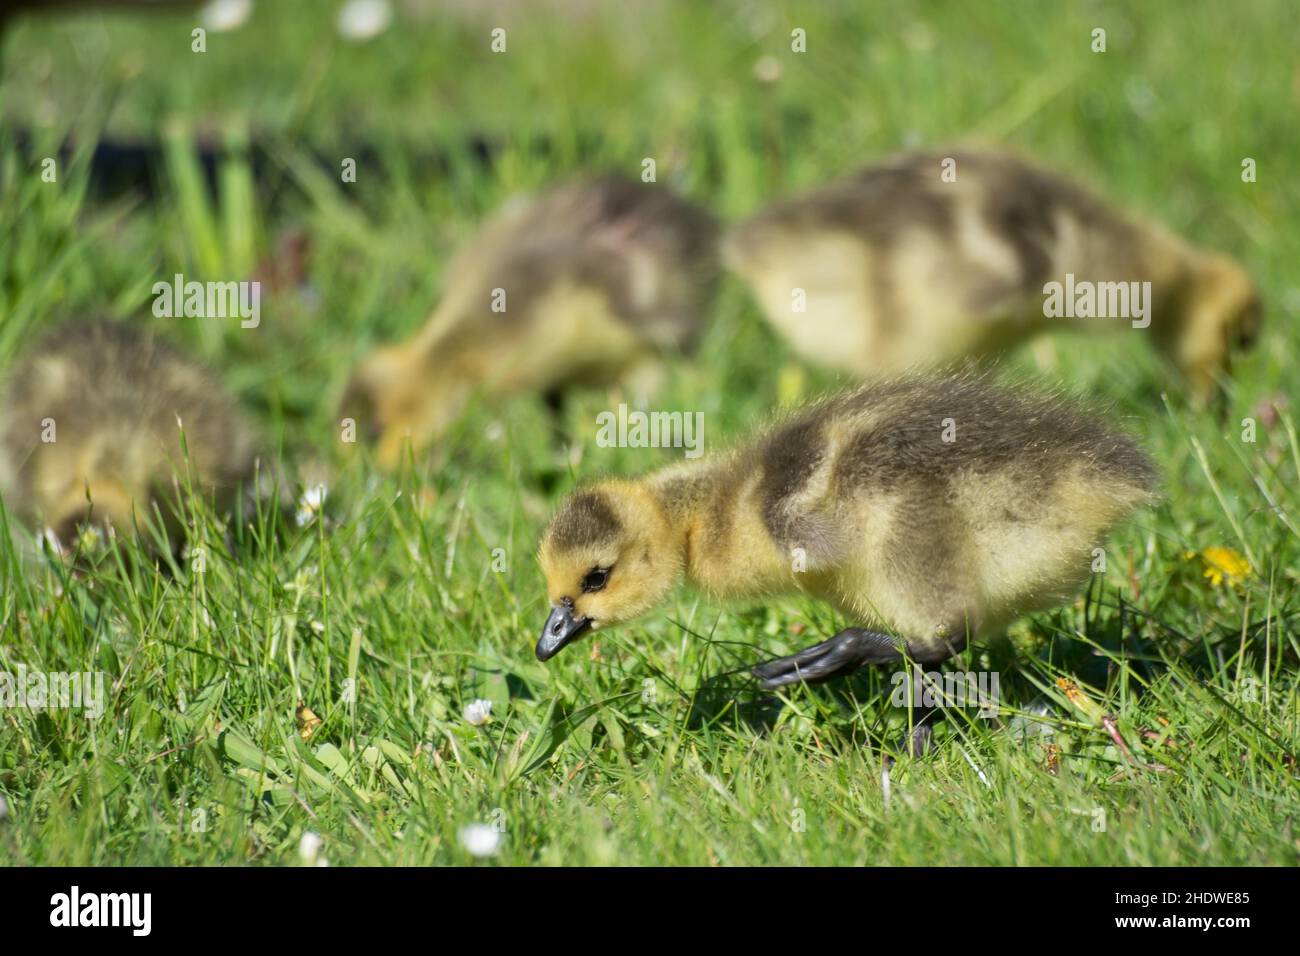 chicks, gosling, baby chicken, baby duck, chicken baby, young bird, young birds Stock Photo